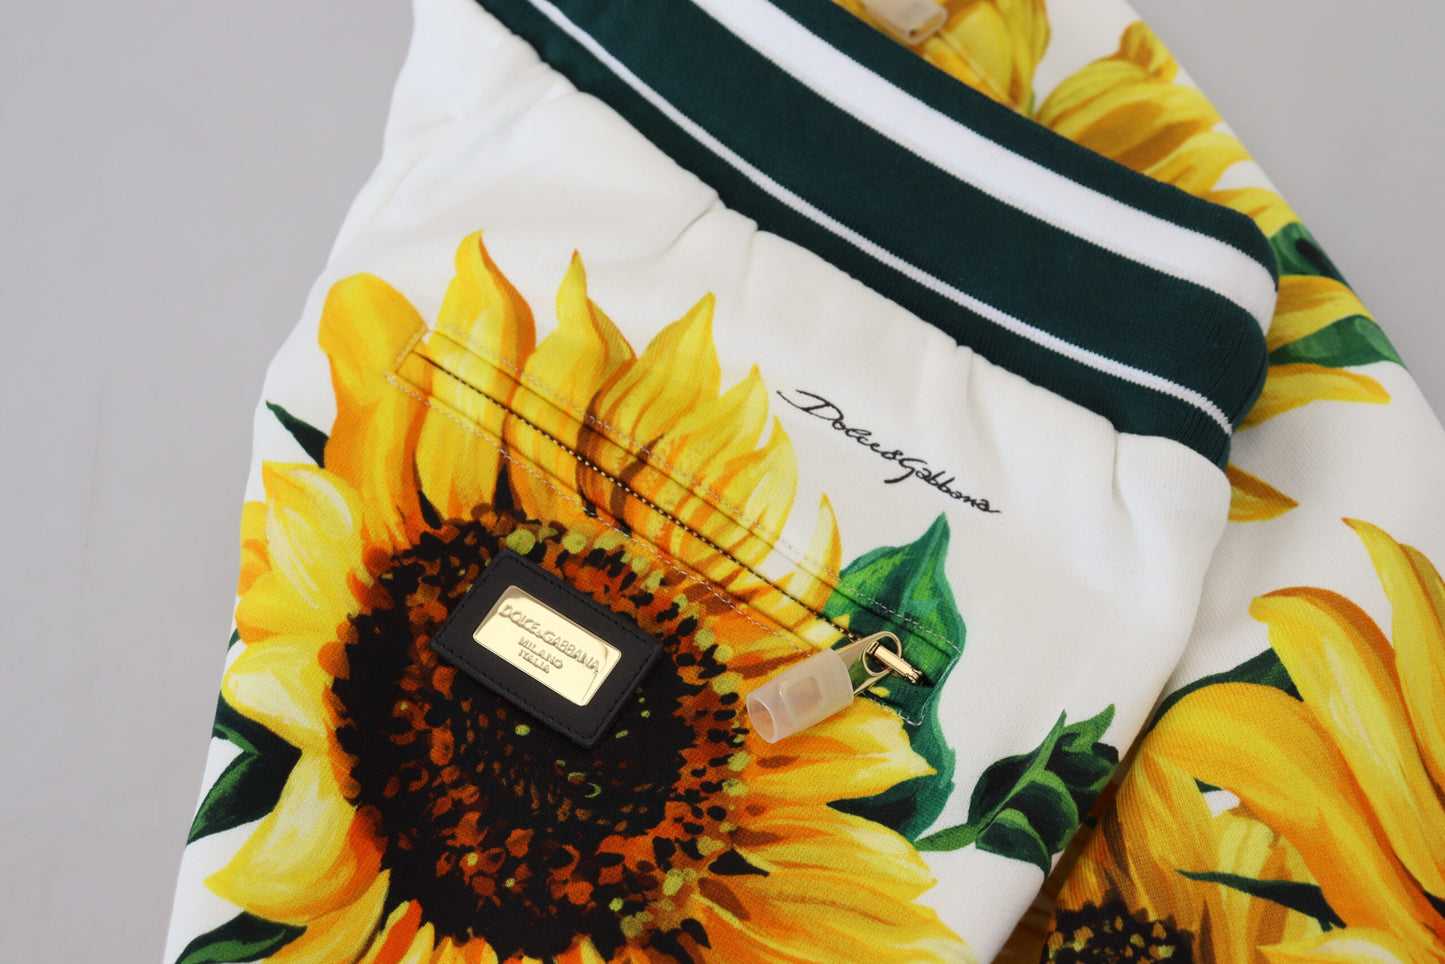 Sunflower Print Cotton Sweatpants